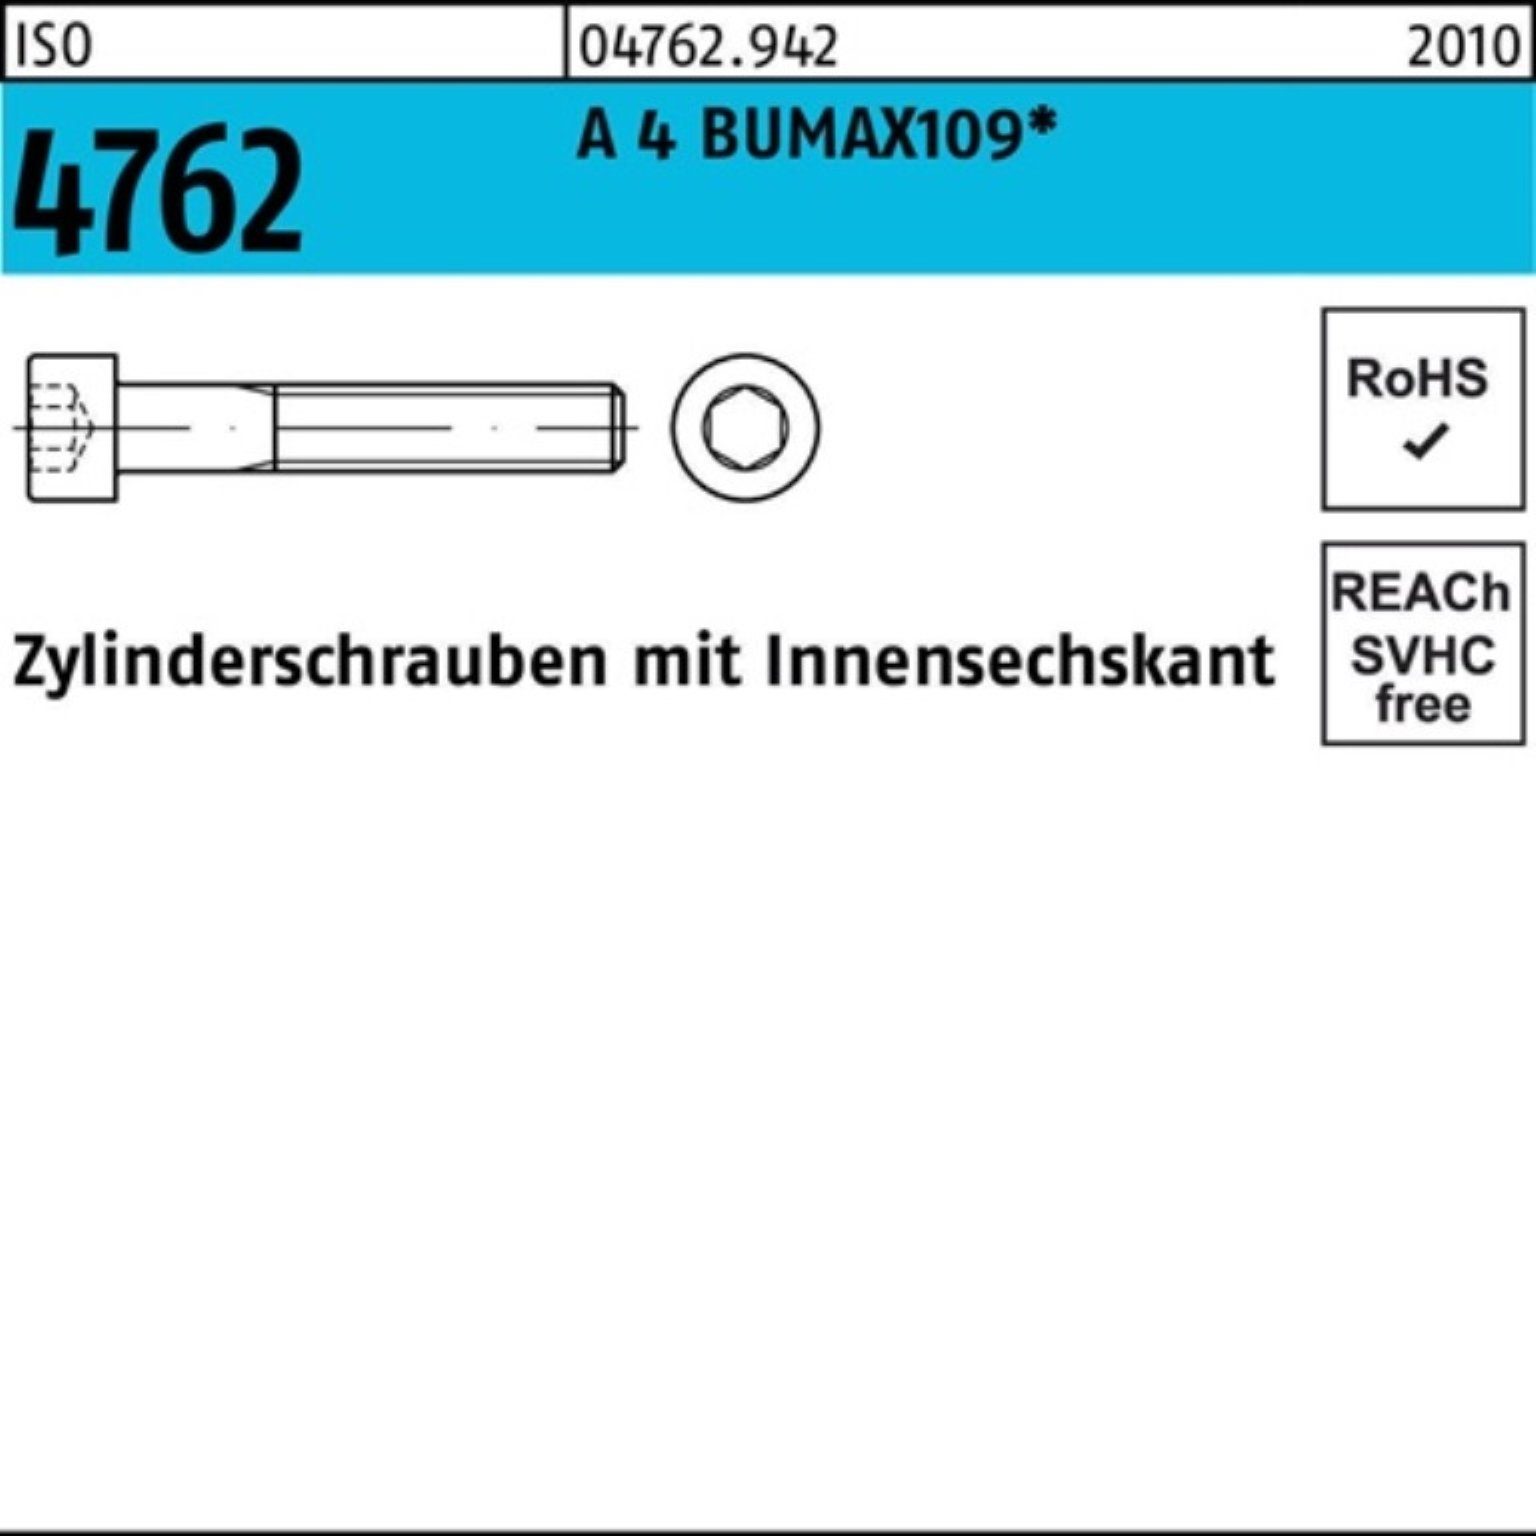 80 BUMAX109 4762 Innen-6kt Zylinderschraube Pack 100er Zylinderschraube A 25 M12x ISO Bufab 4